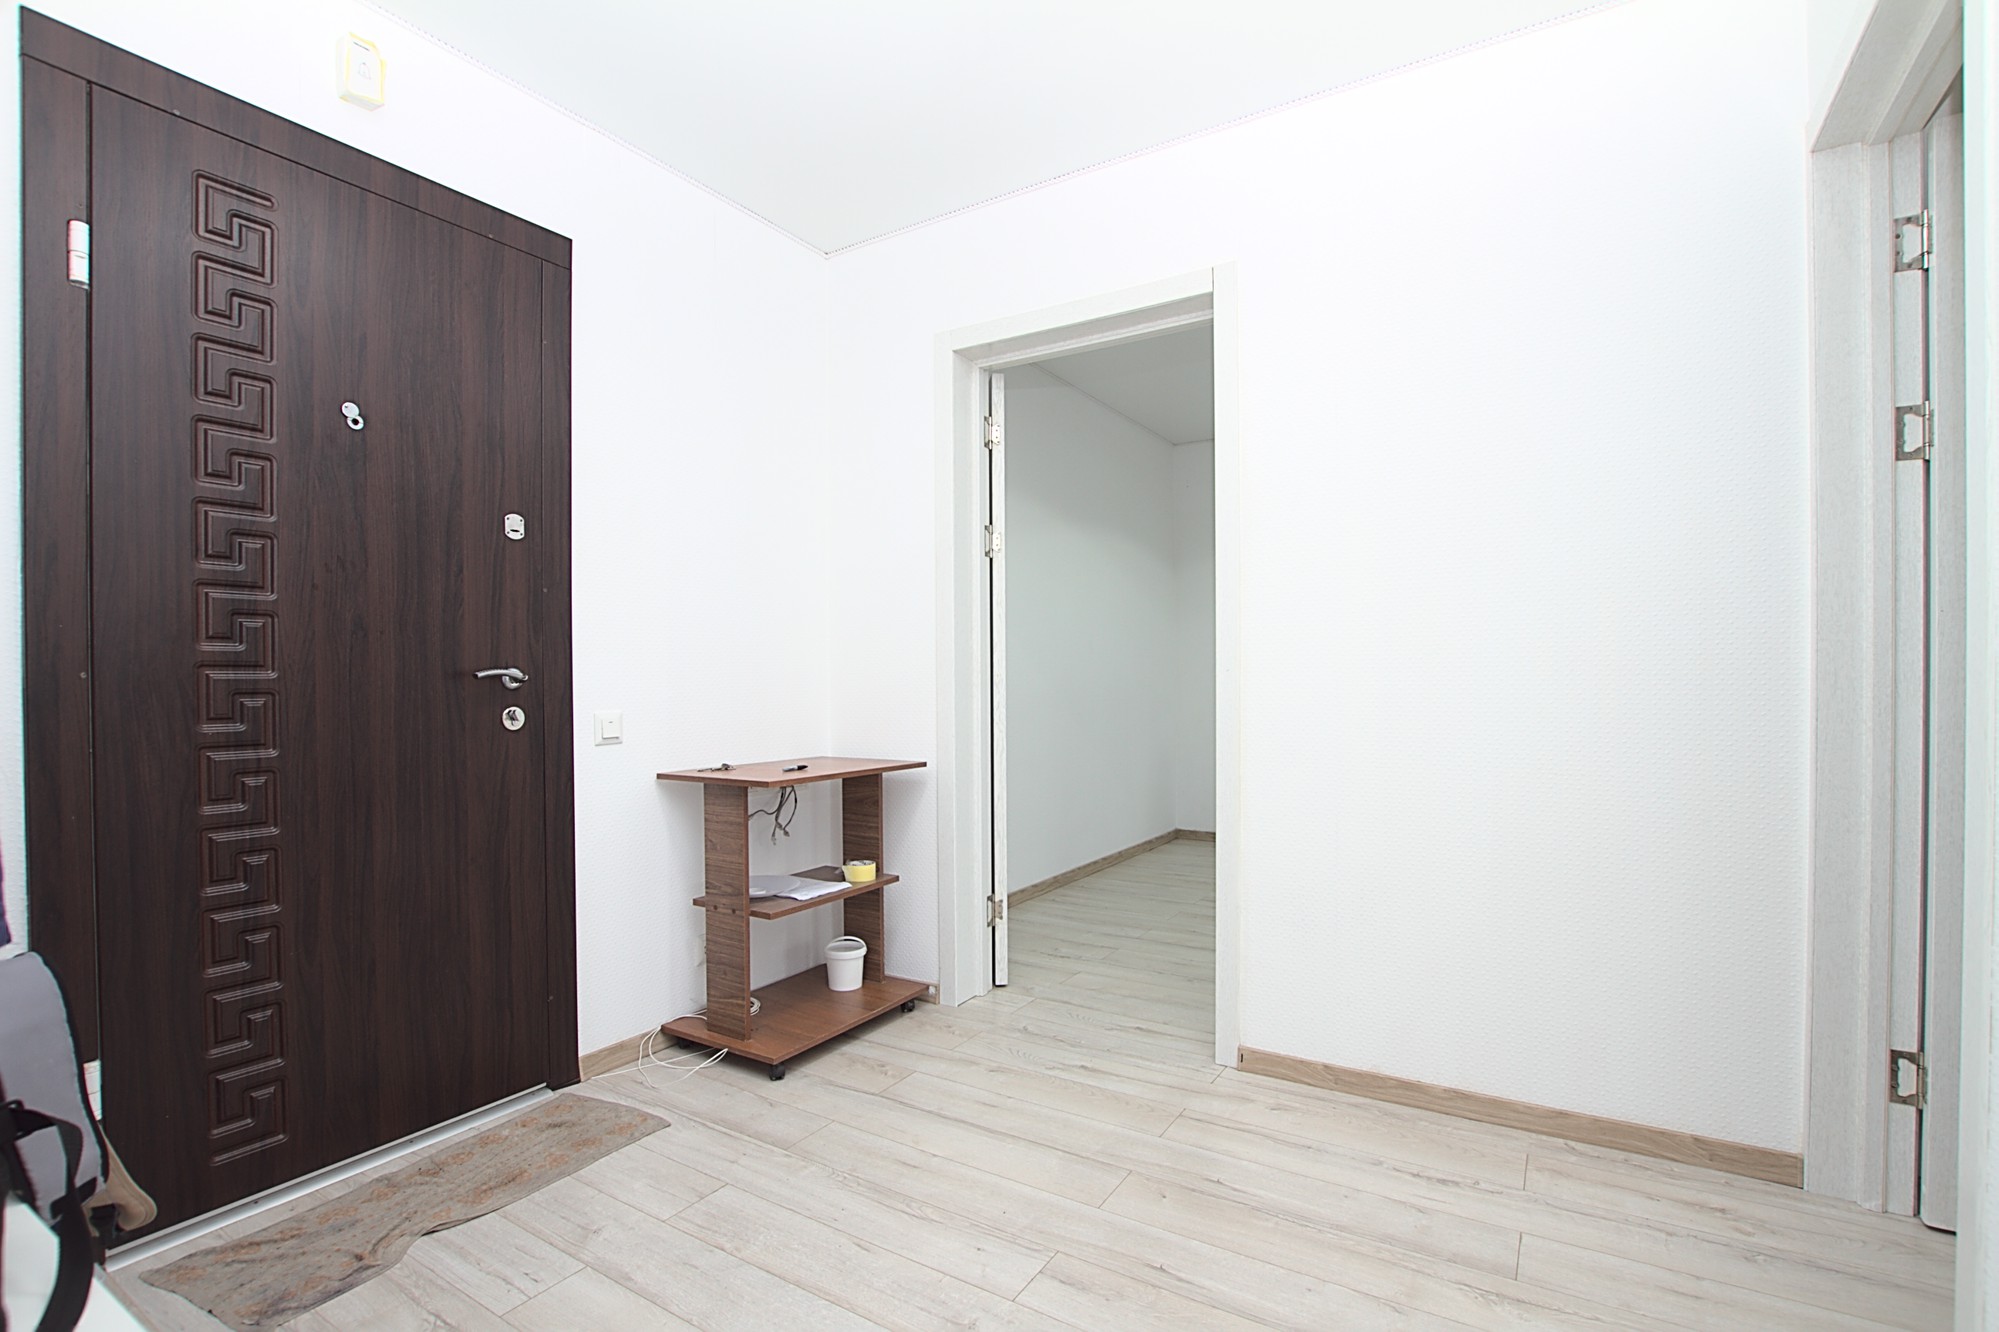 Botanica Suite is a 2 rooms apartment for rent in Chisinau, Moldova